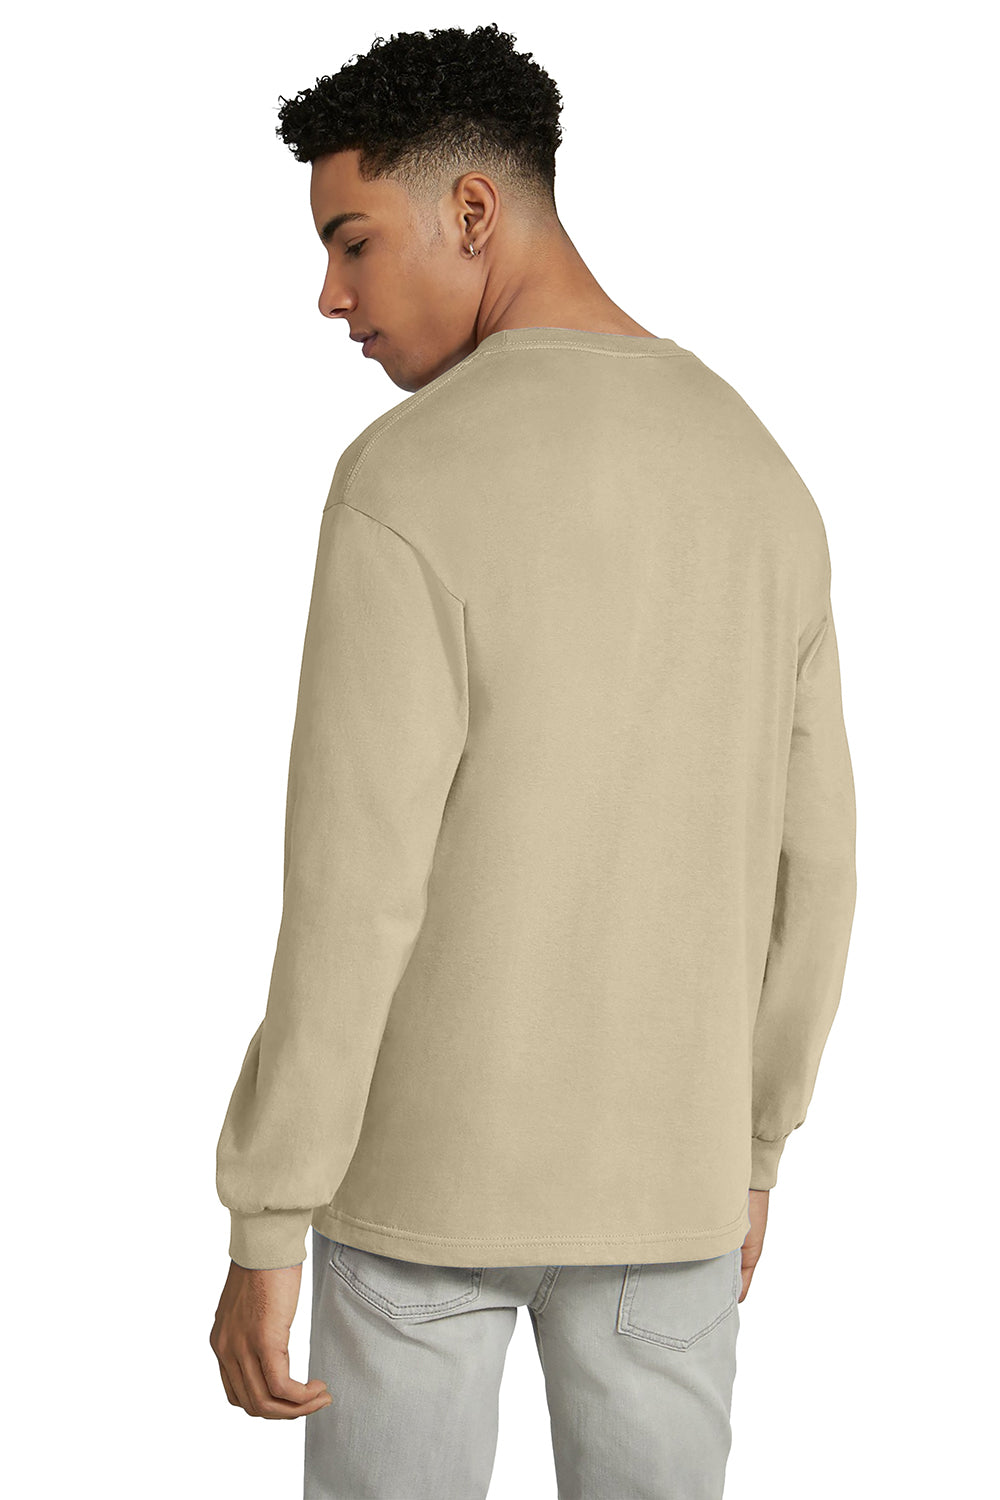 American Apparel AL1304/1304 Mens Long Sleeve Crewneck T-Shirt Sand Model Back